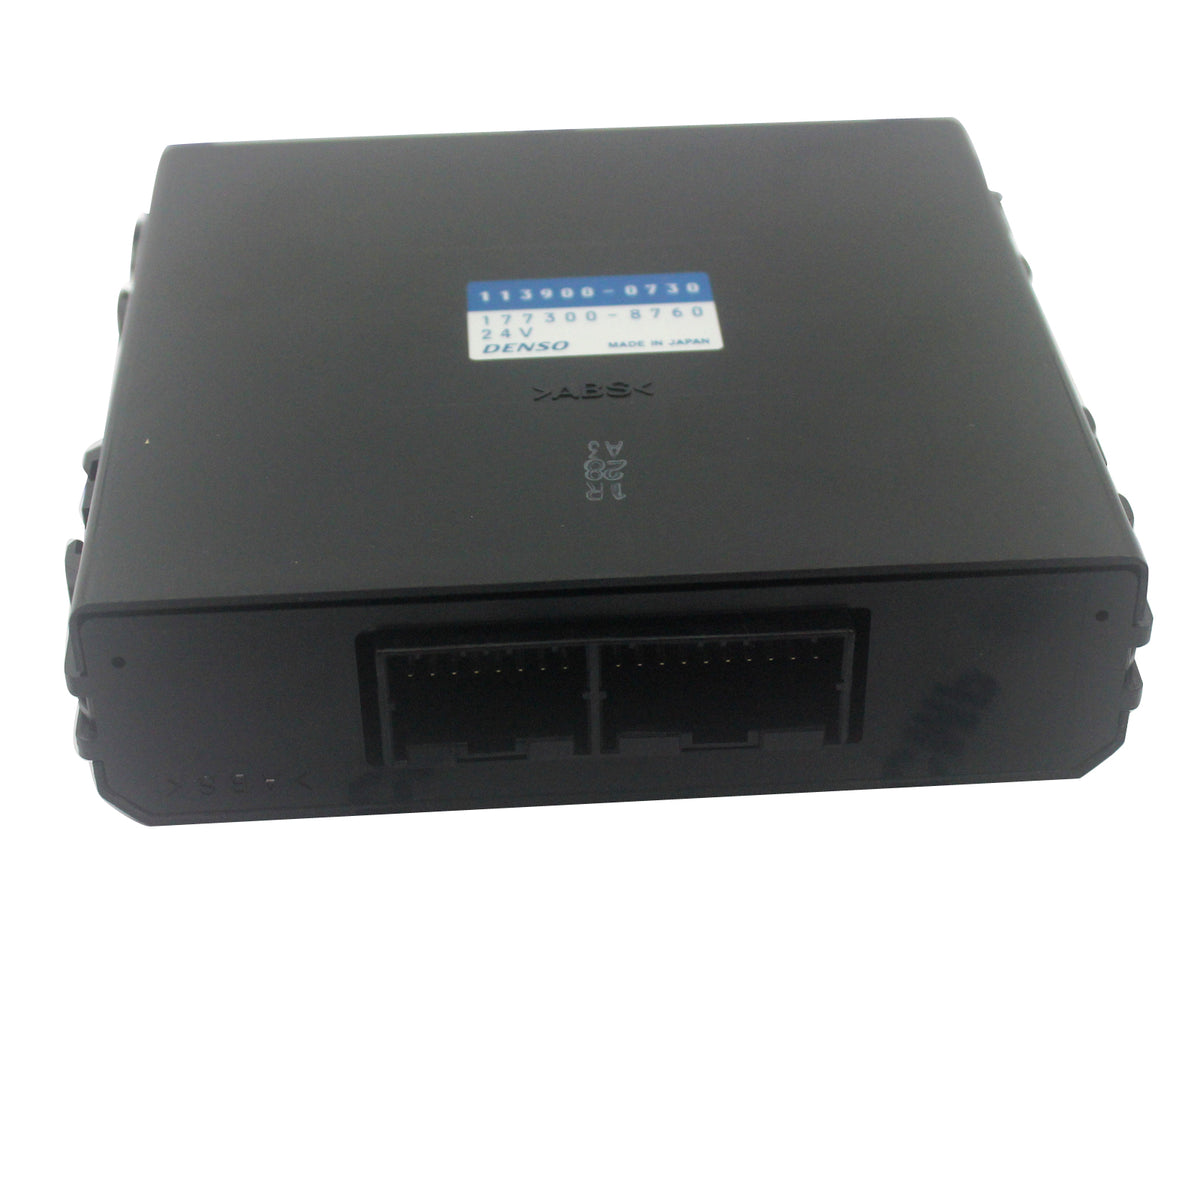 PC200-8 PC300-8 PC400-8 Komatsu Air Conditioner Control Panel 20Y-810-1231